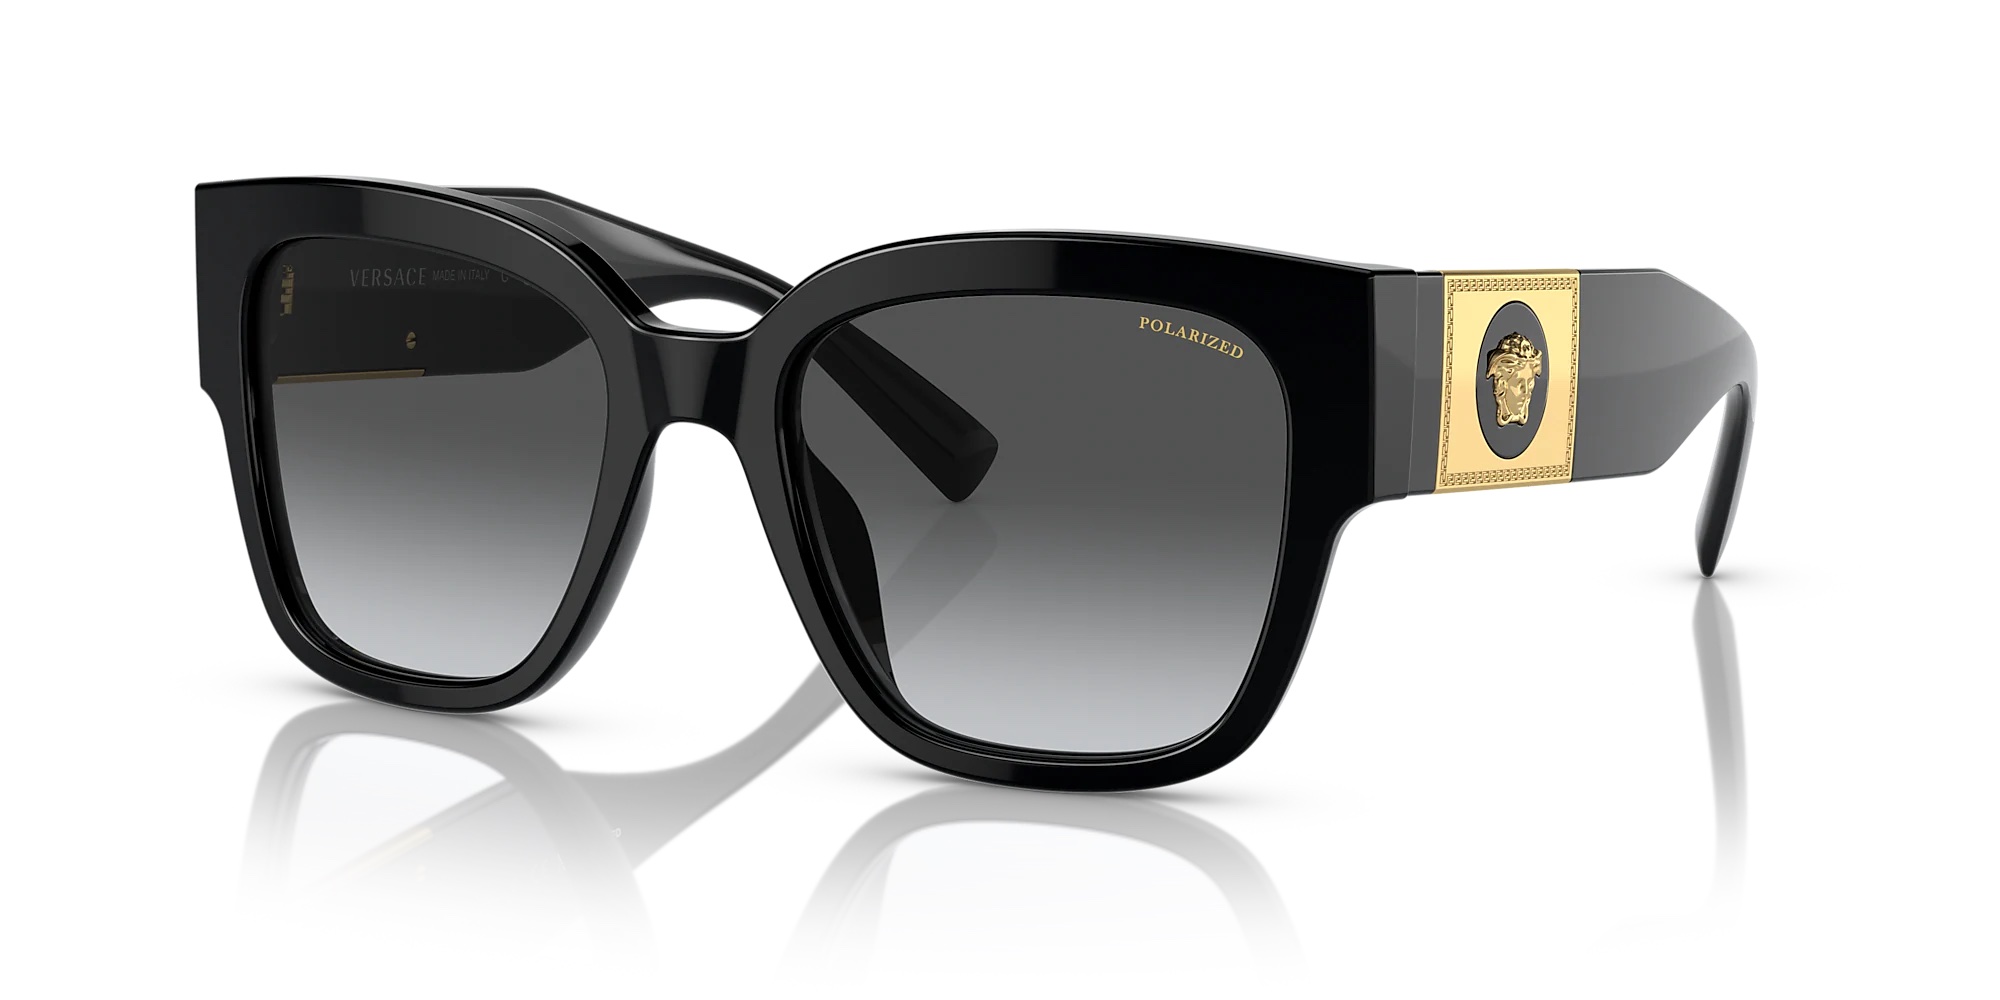 Versace Sunglasses from Sunglass Hut